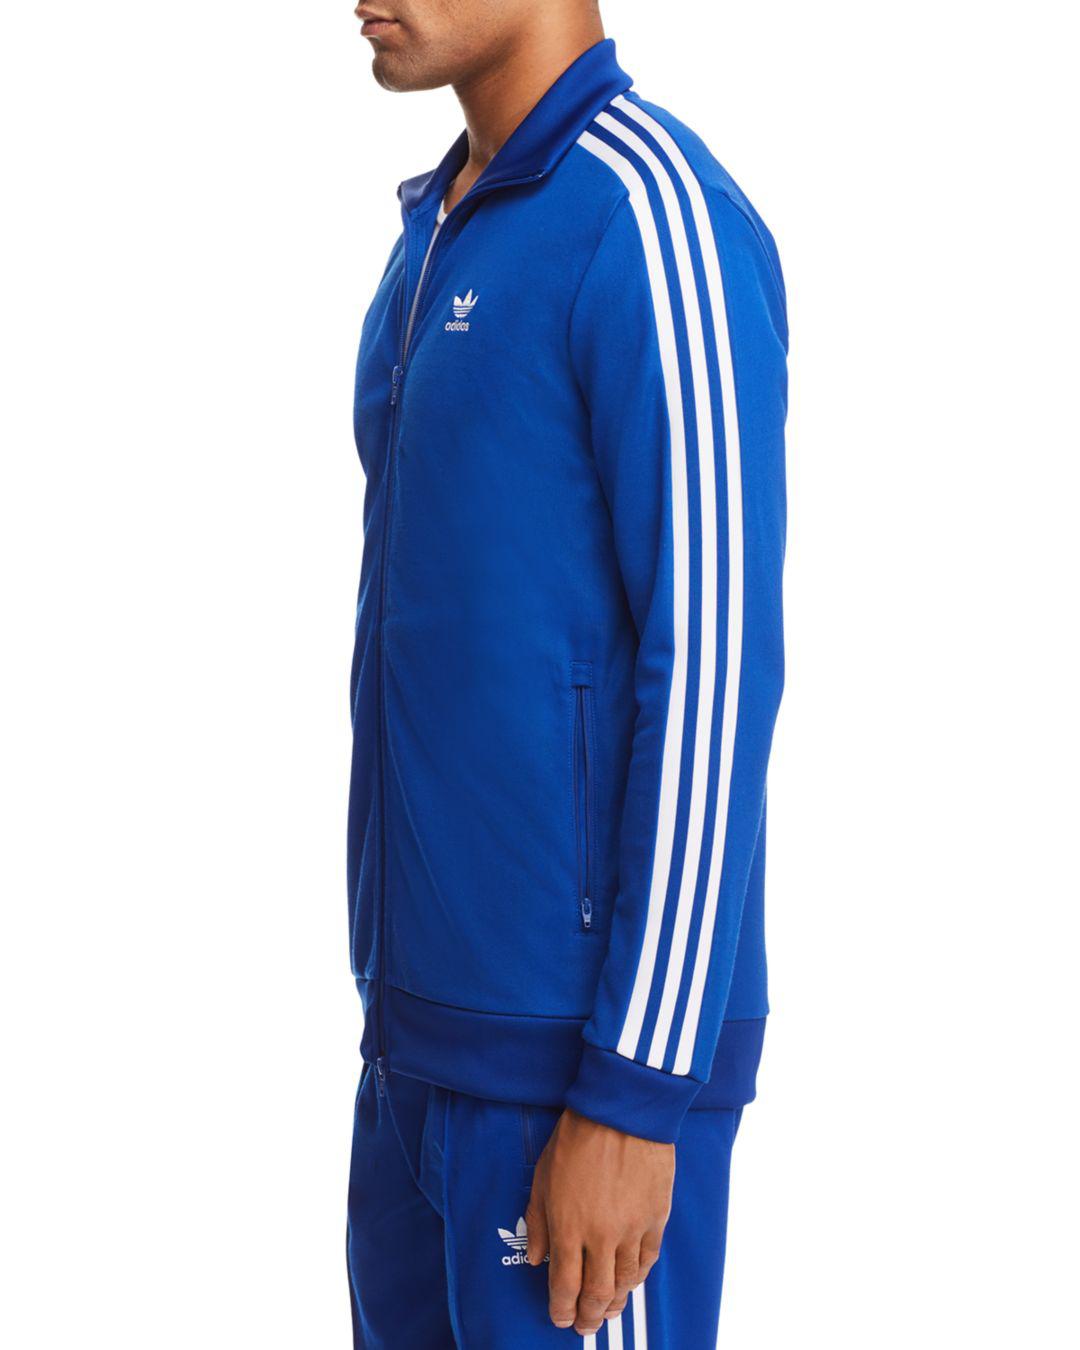 adidas beckenbauer jacket blue